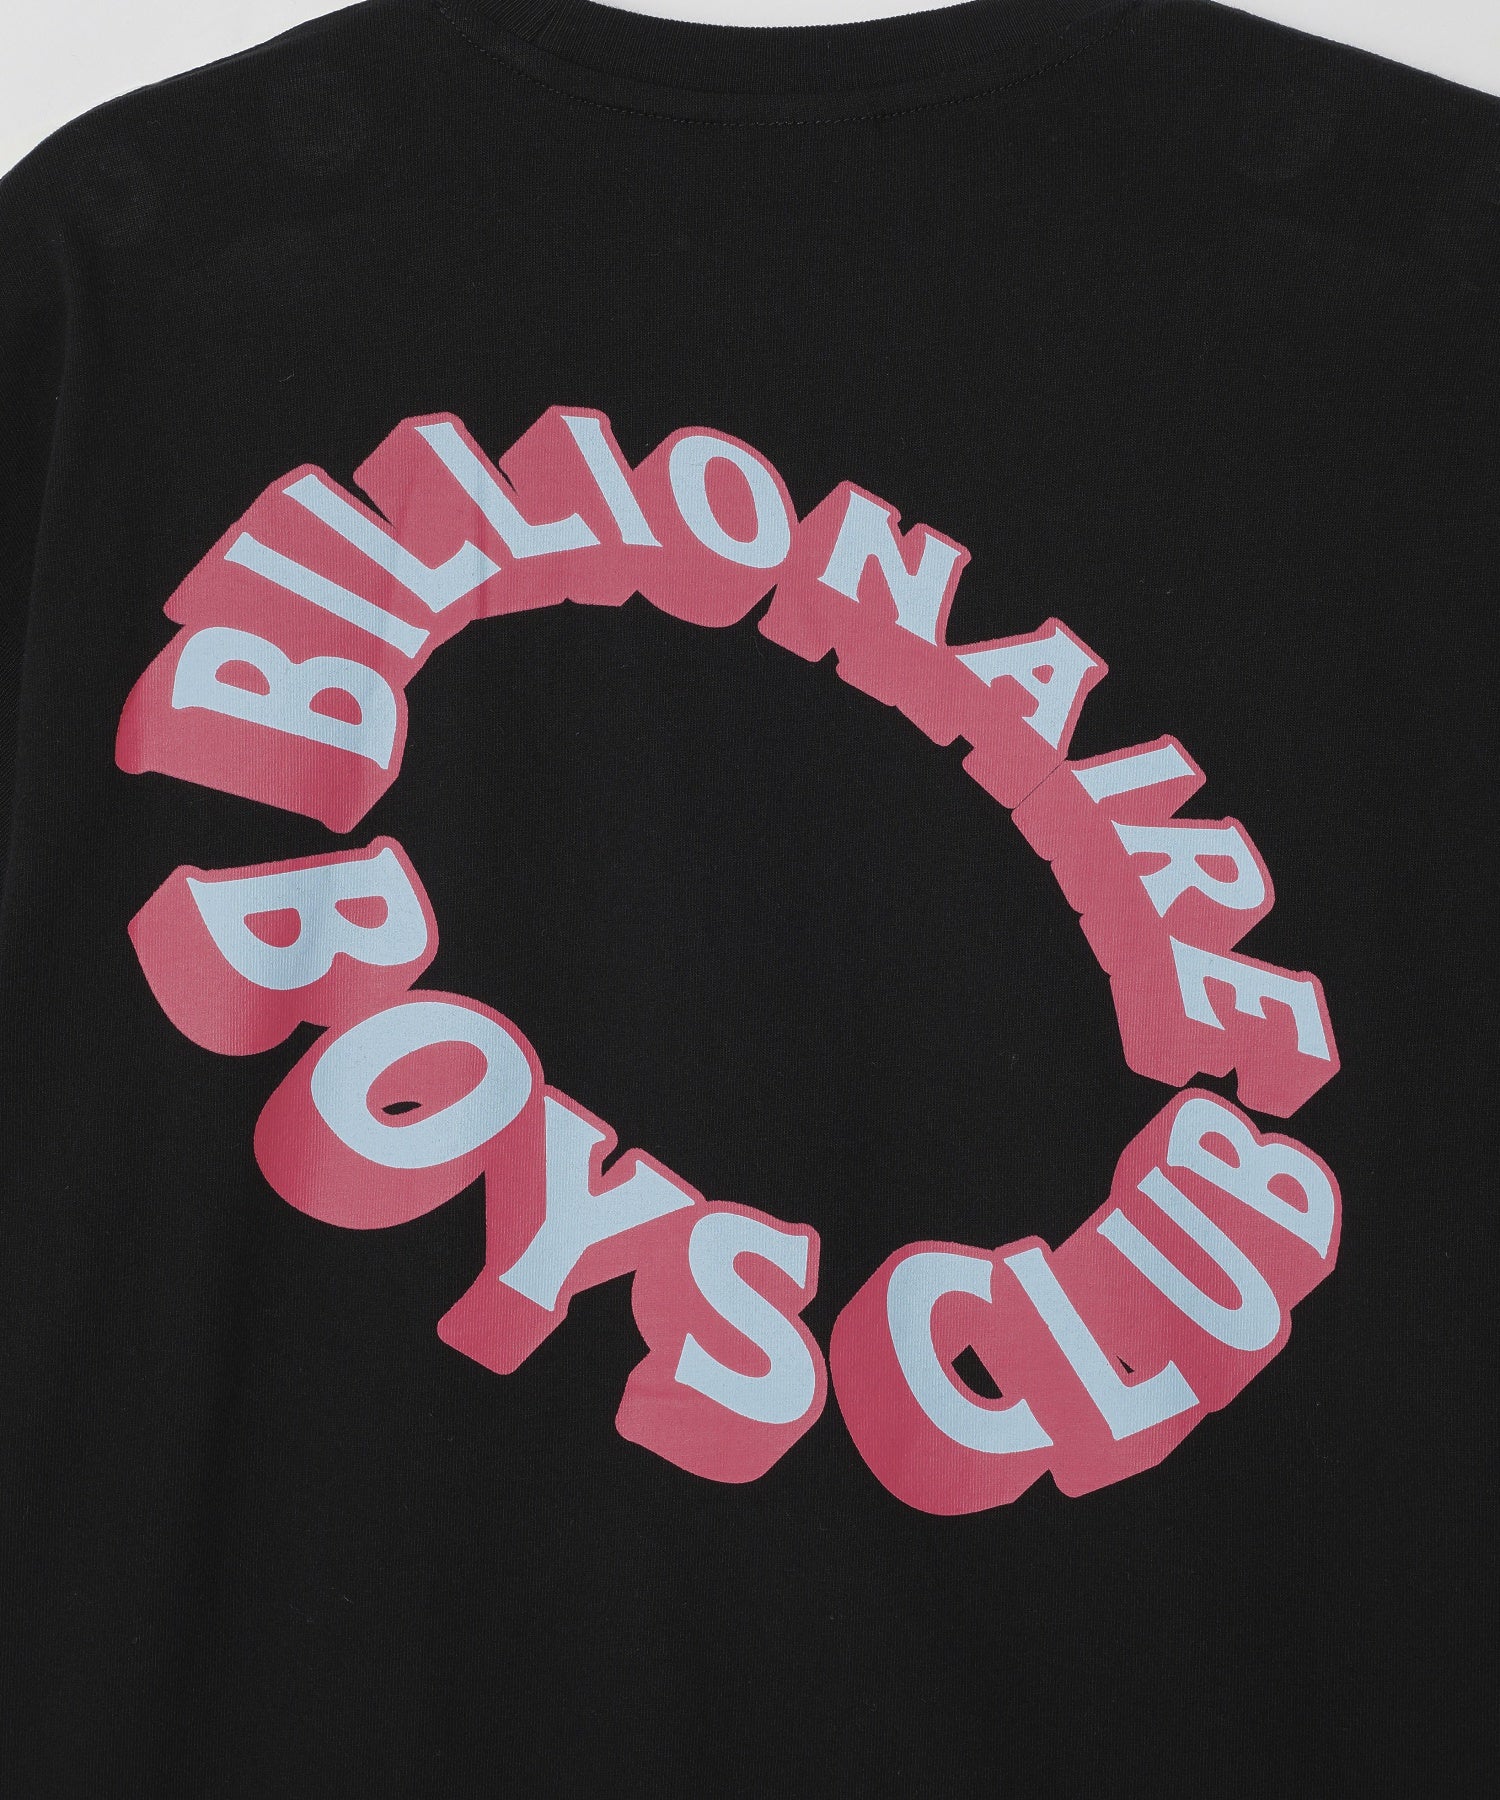 BILLIONAIRE BOYS CLUB/ビリオネア・ボーイズ・クラブ/BB ROTATE T-SHIRT/841-3200